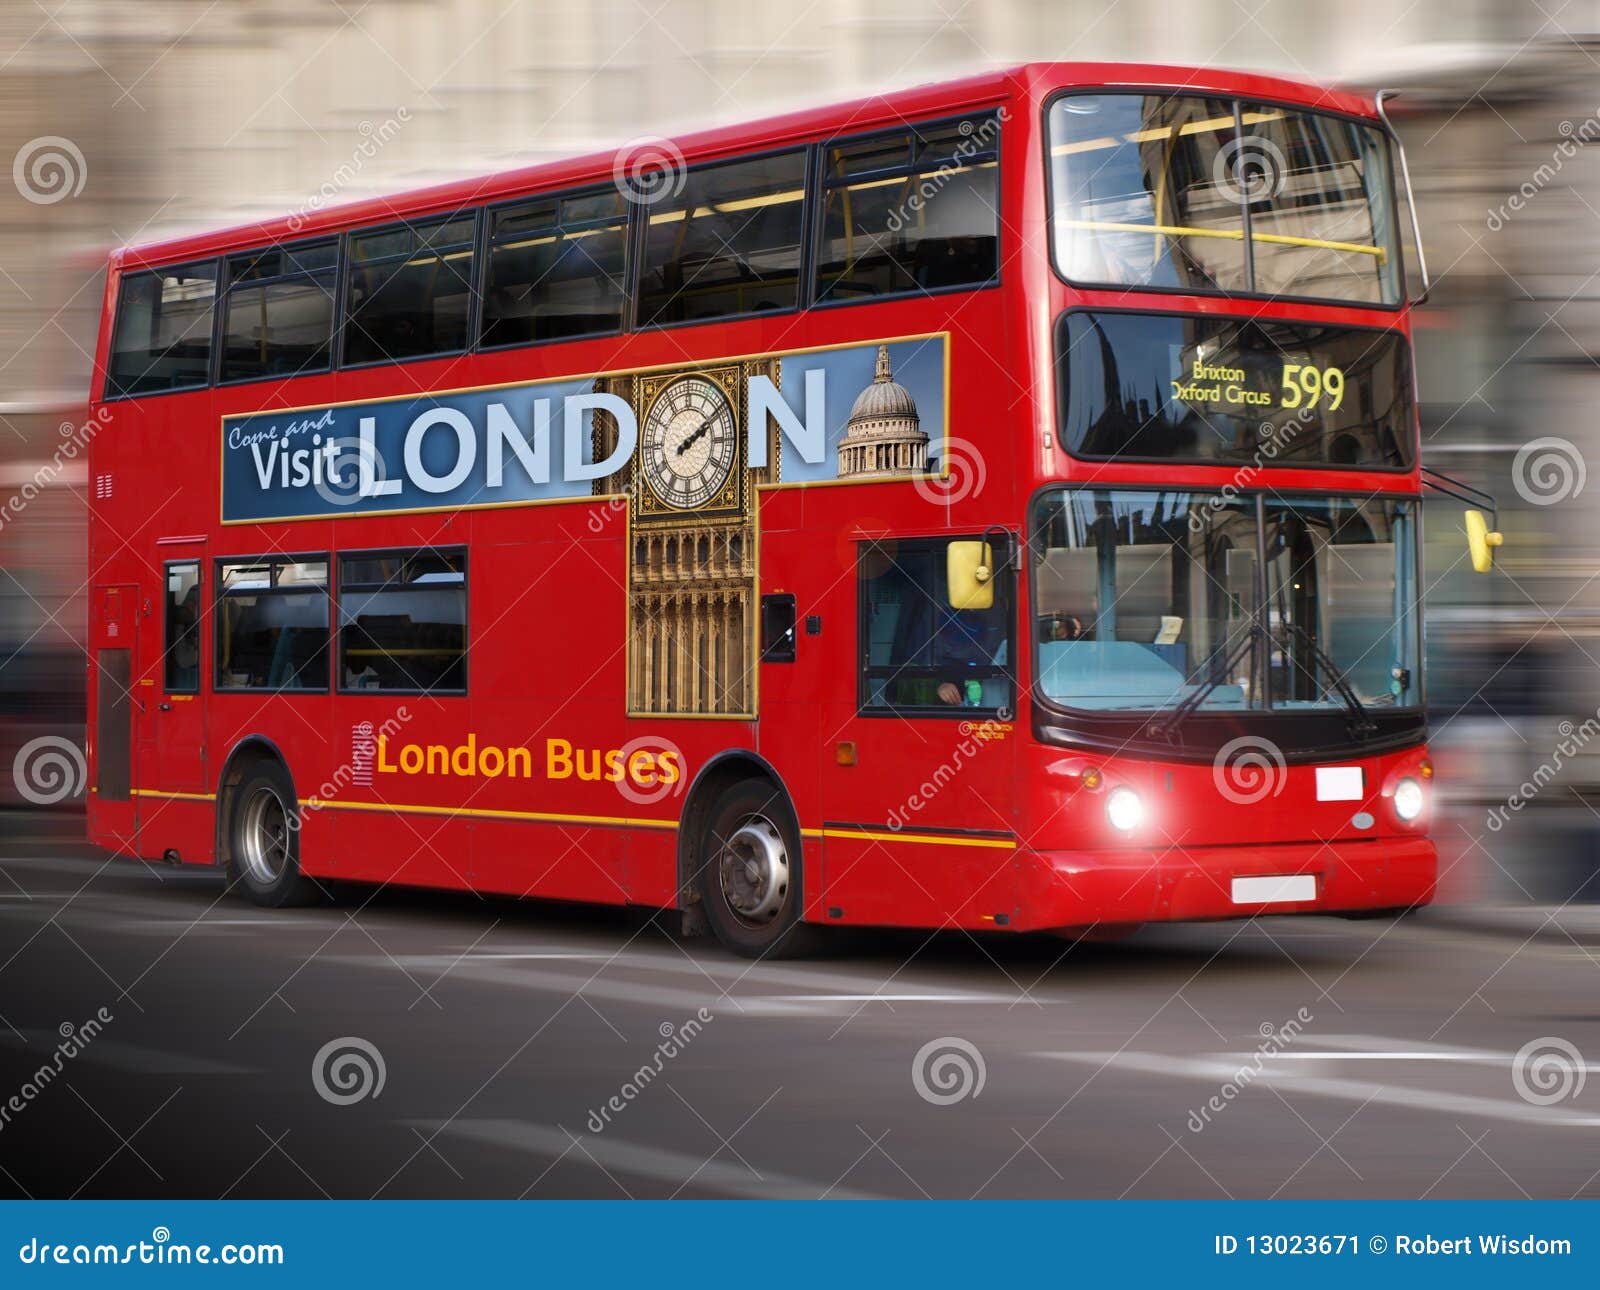 modern london bus